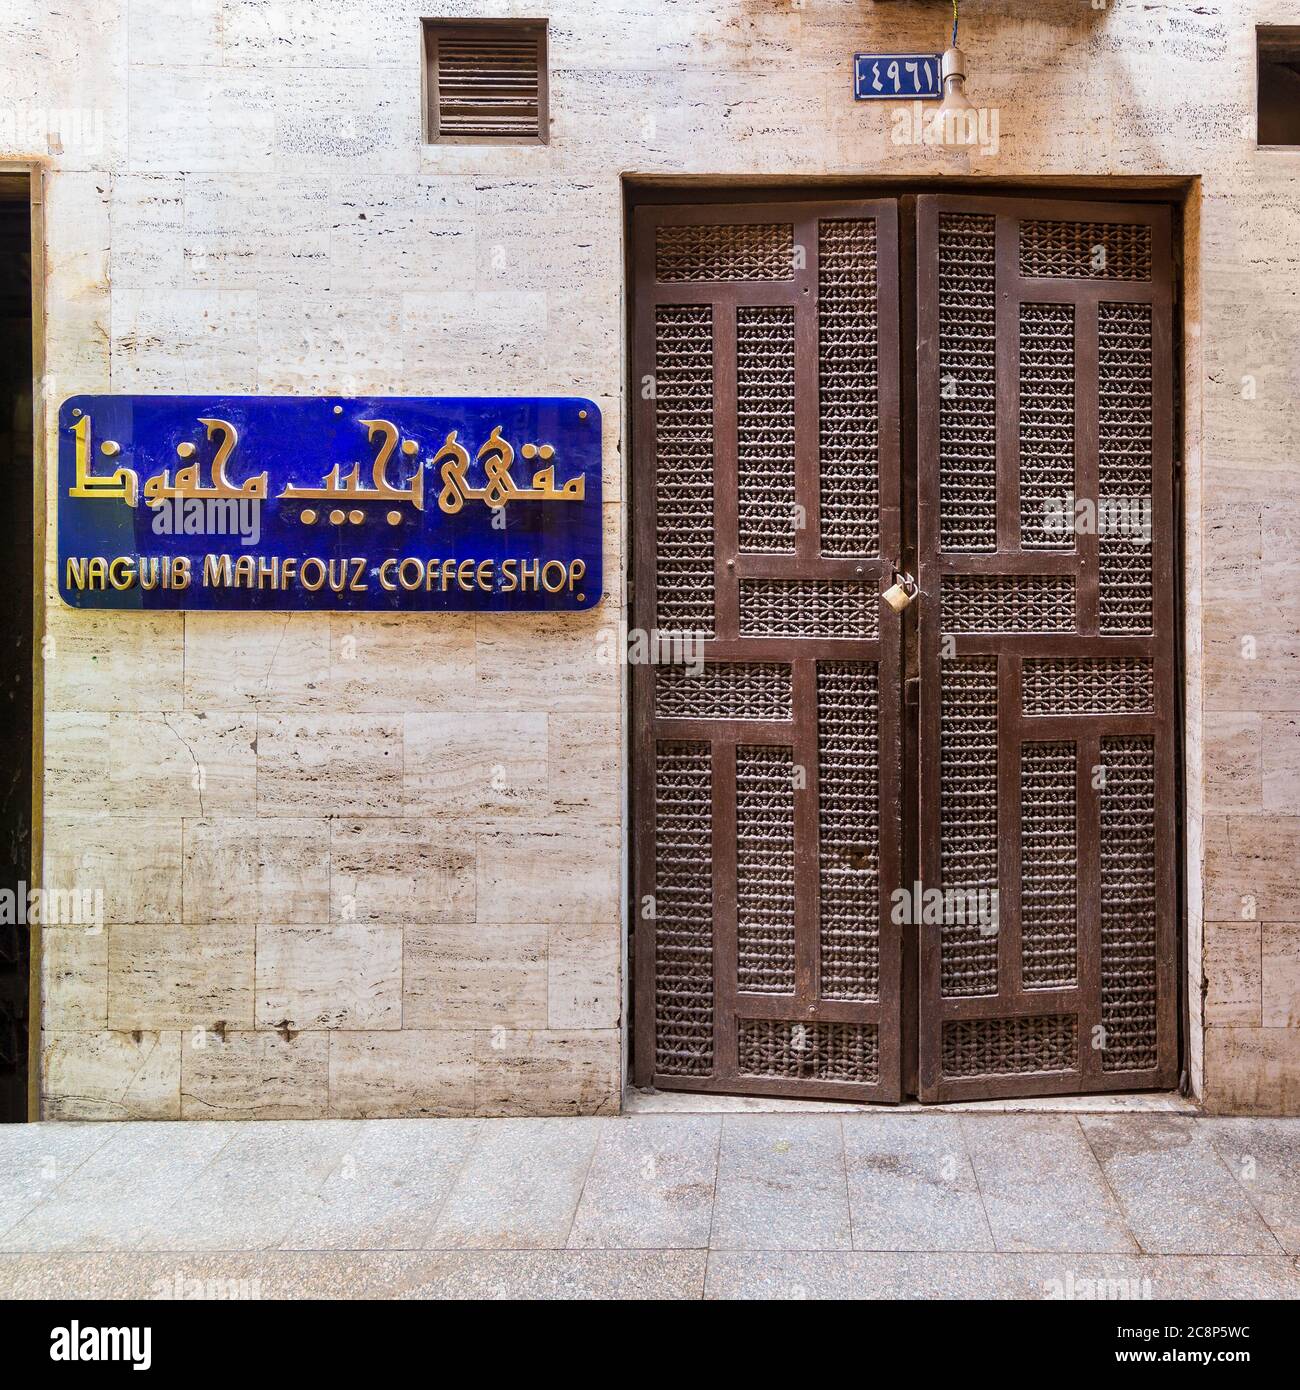 Cairo, Egypt- June 26 2020: Entrance of famous Naguib Mahfouz coffeehouse, located in historic Mamluk era Khan al-Khalili famous bazaar and souq, closed during Covid-19 lockdown Stock Photo